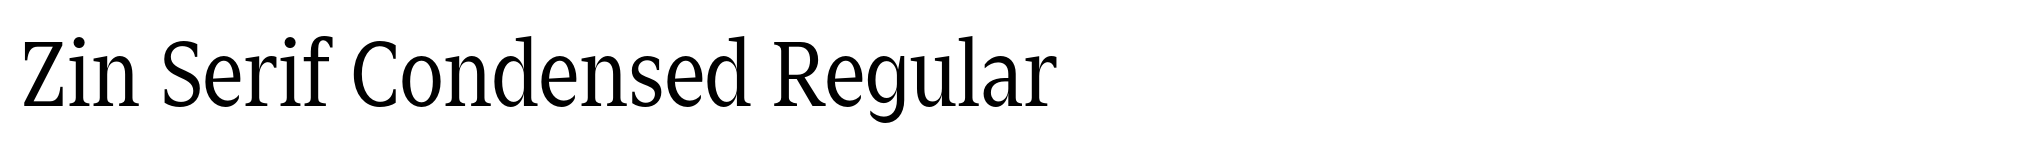 Zin Serif Condensed Regular image